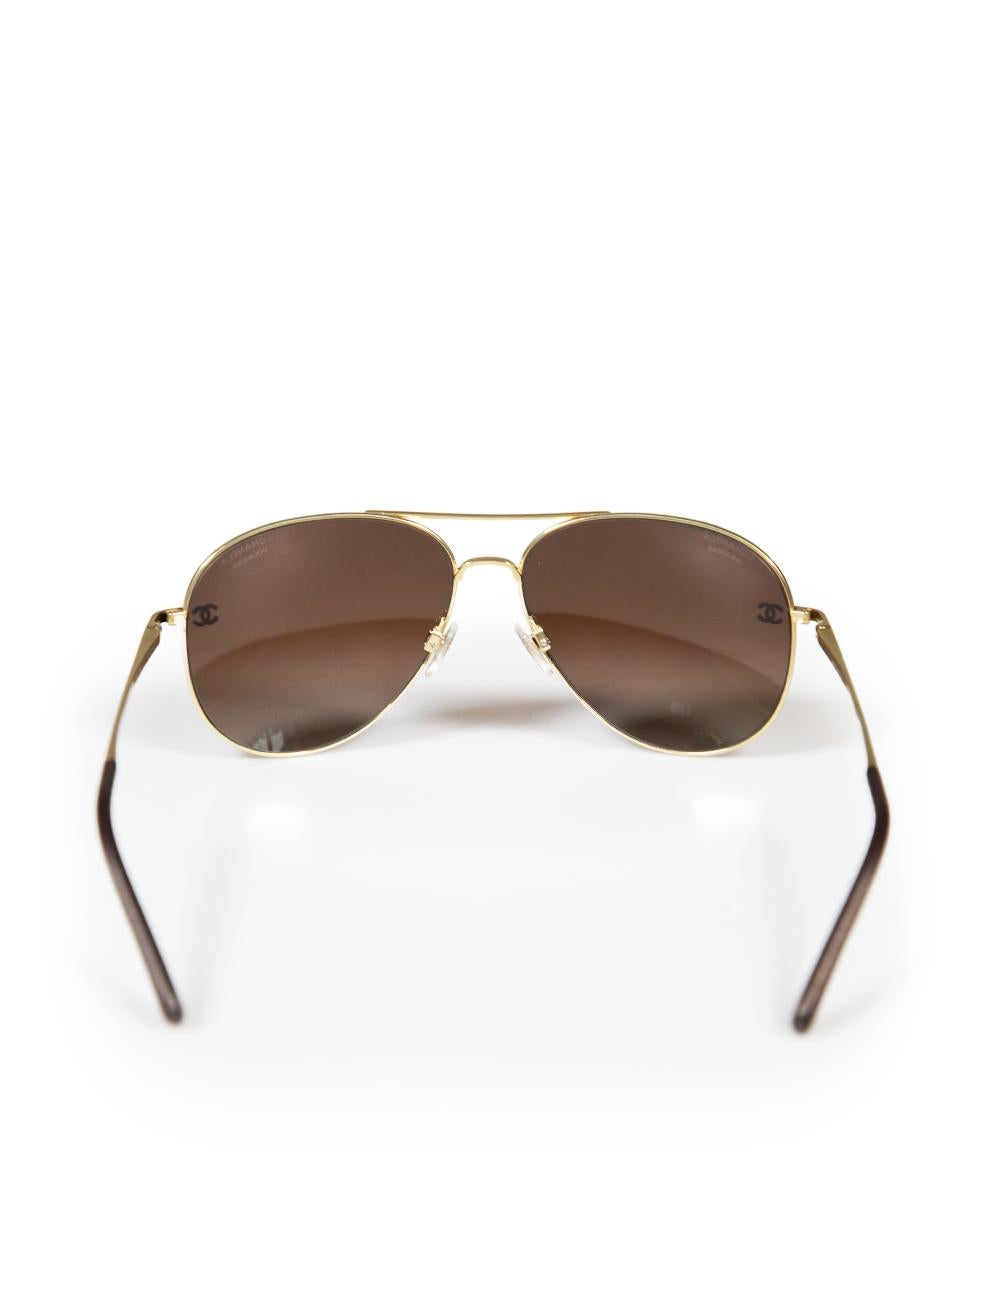 Chanel Brown Interlocking CC Aviator Sunglasses In Good Condition For Sale In London, GB